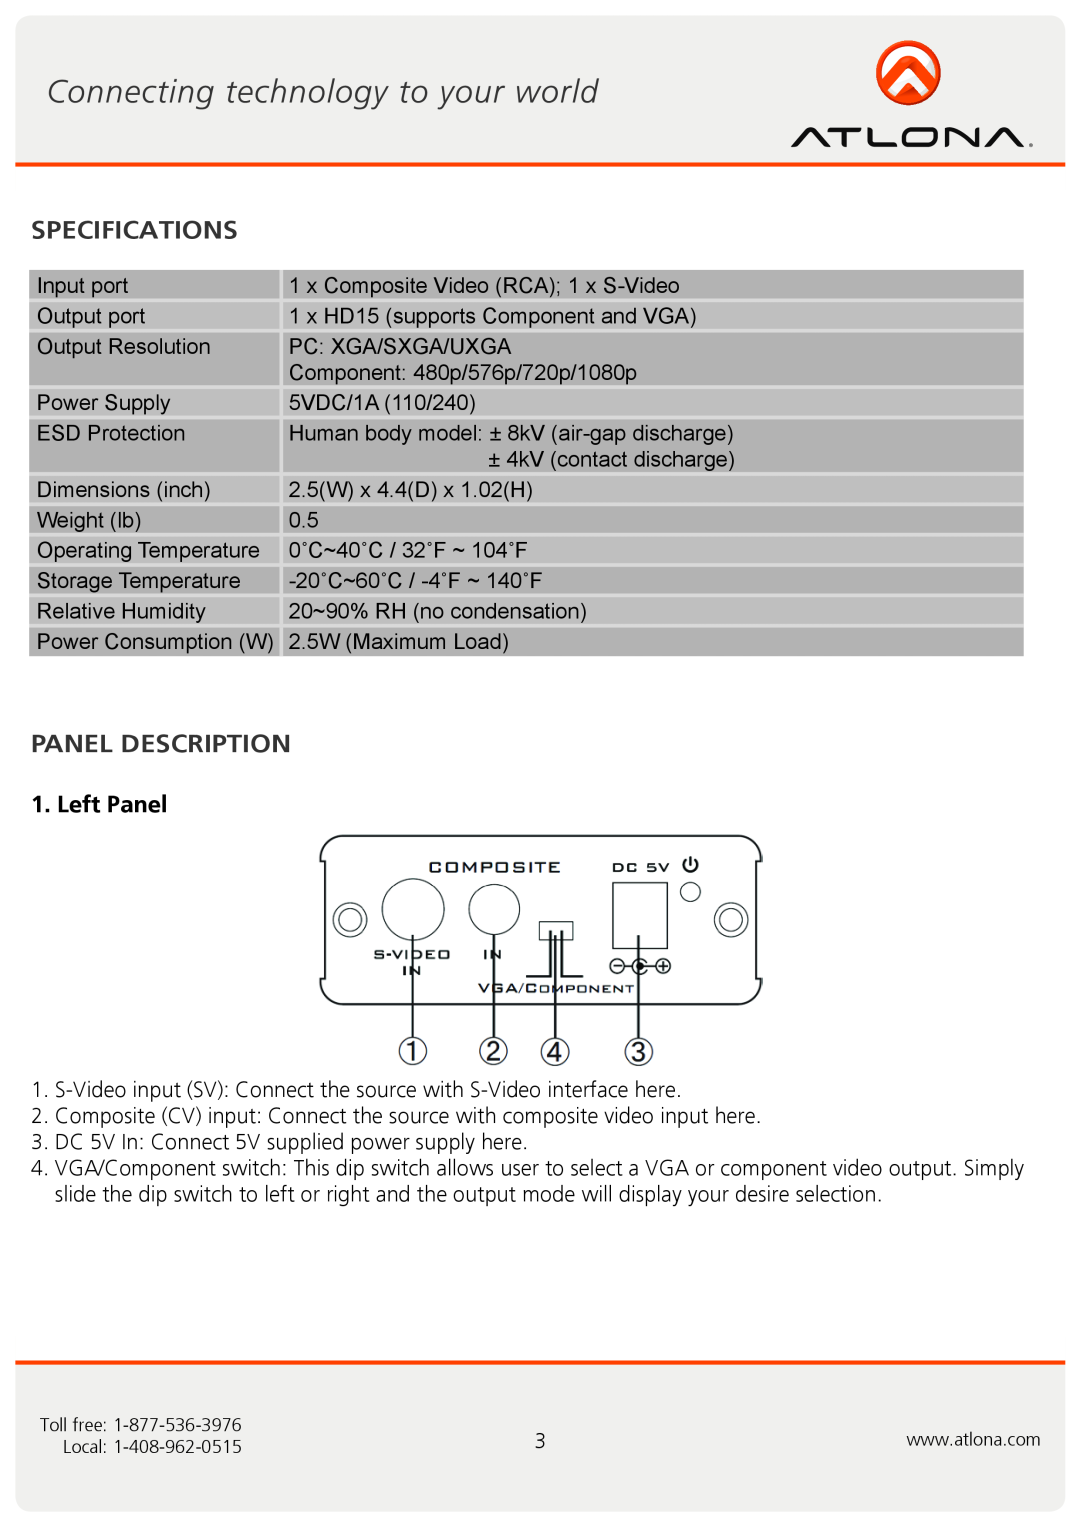 Atlona AT-AVS100 user manual Specifications, Panel Description, Left Panel 